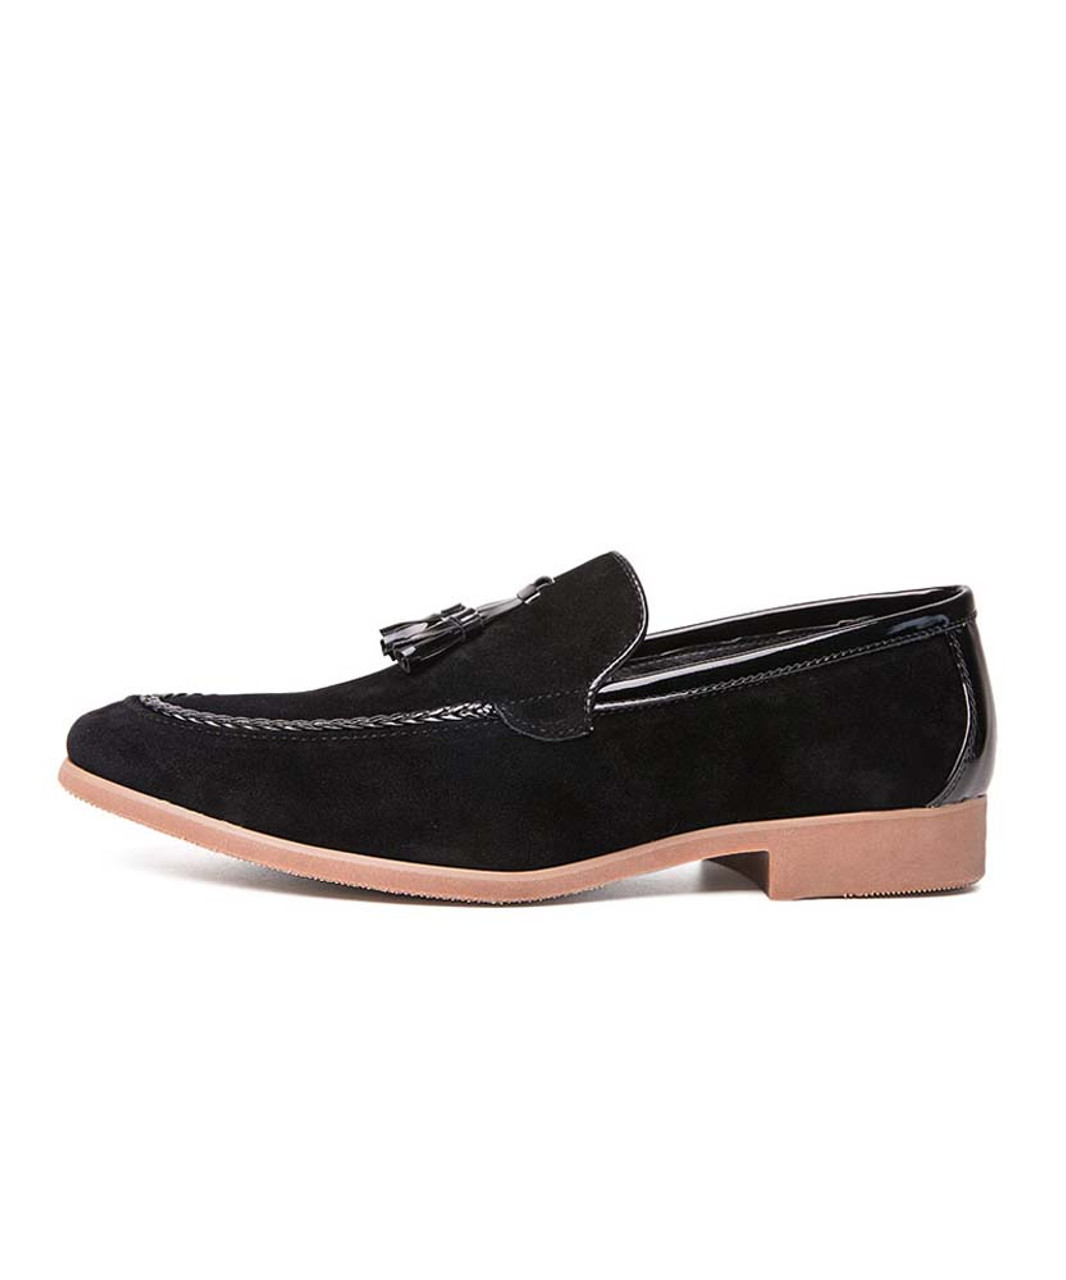 Black suede tassel on top leather slip on dress shoe | Mens dress shoes ...